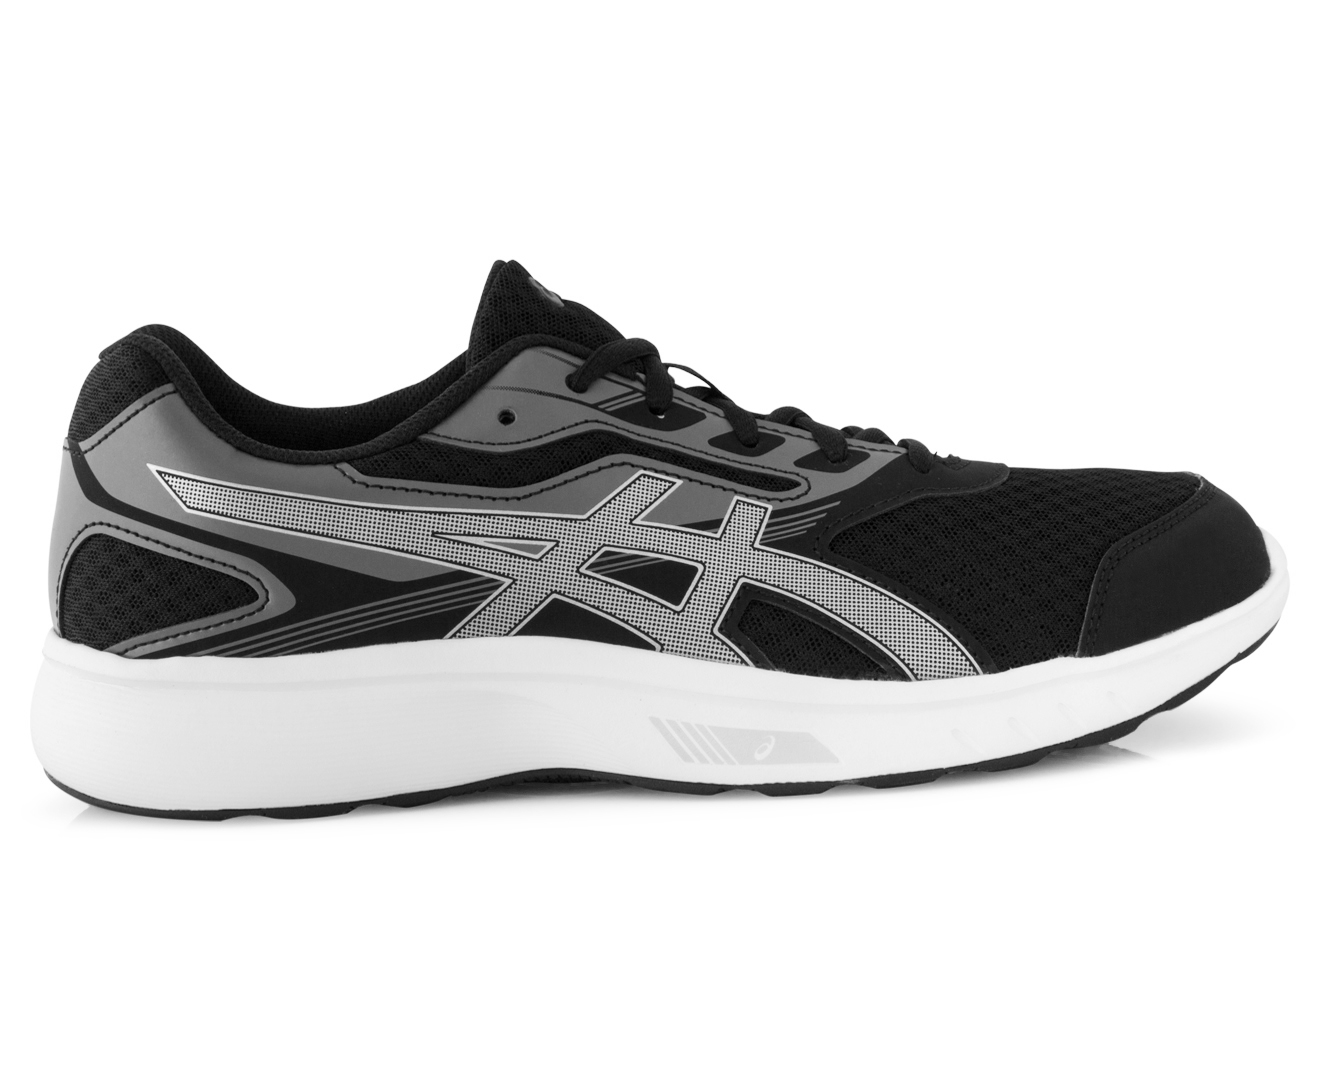 ASICS Men's Stormer Shoe - Black/Silver/White | Catch.co.nz